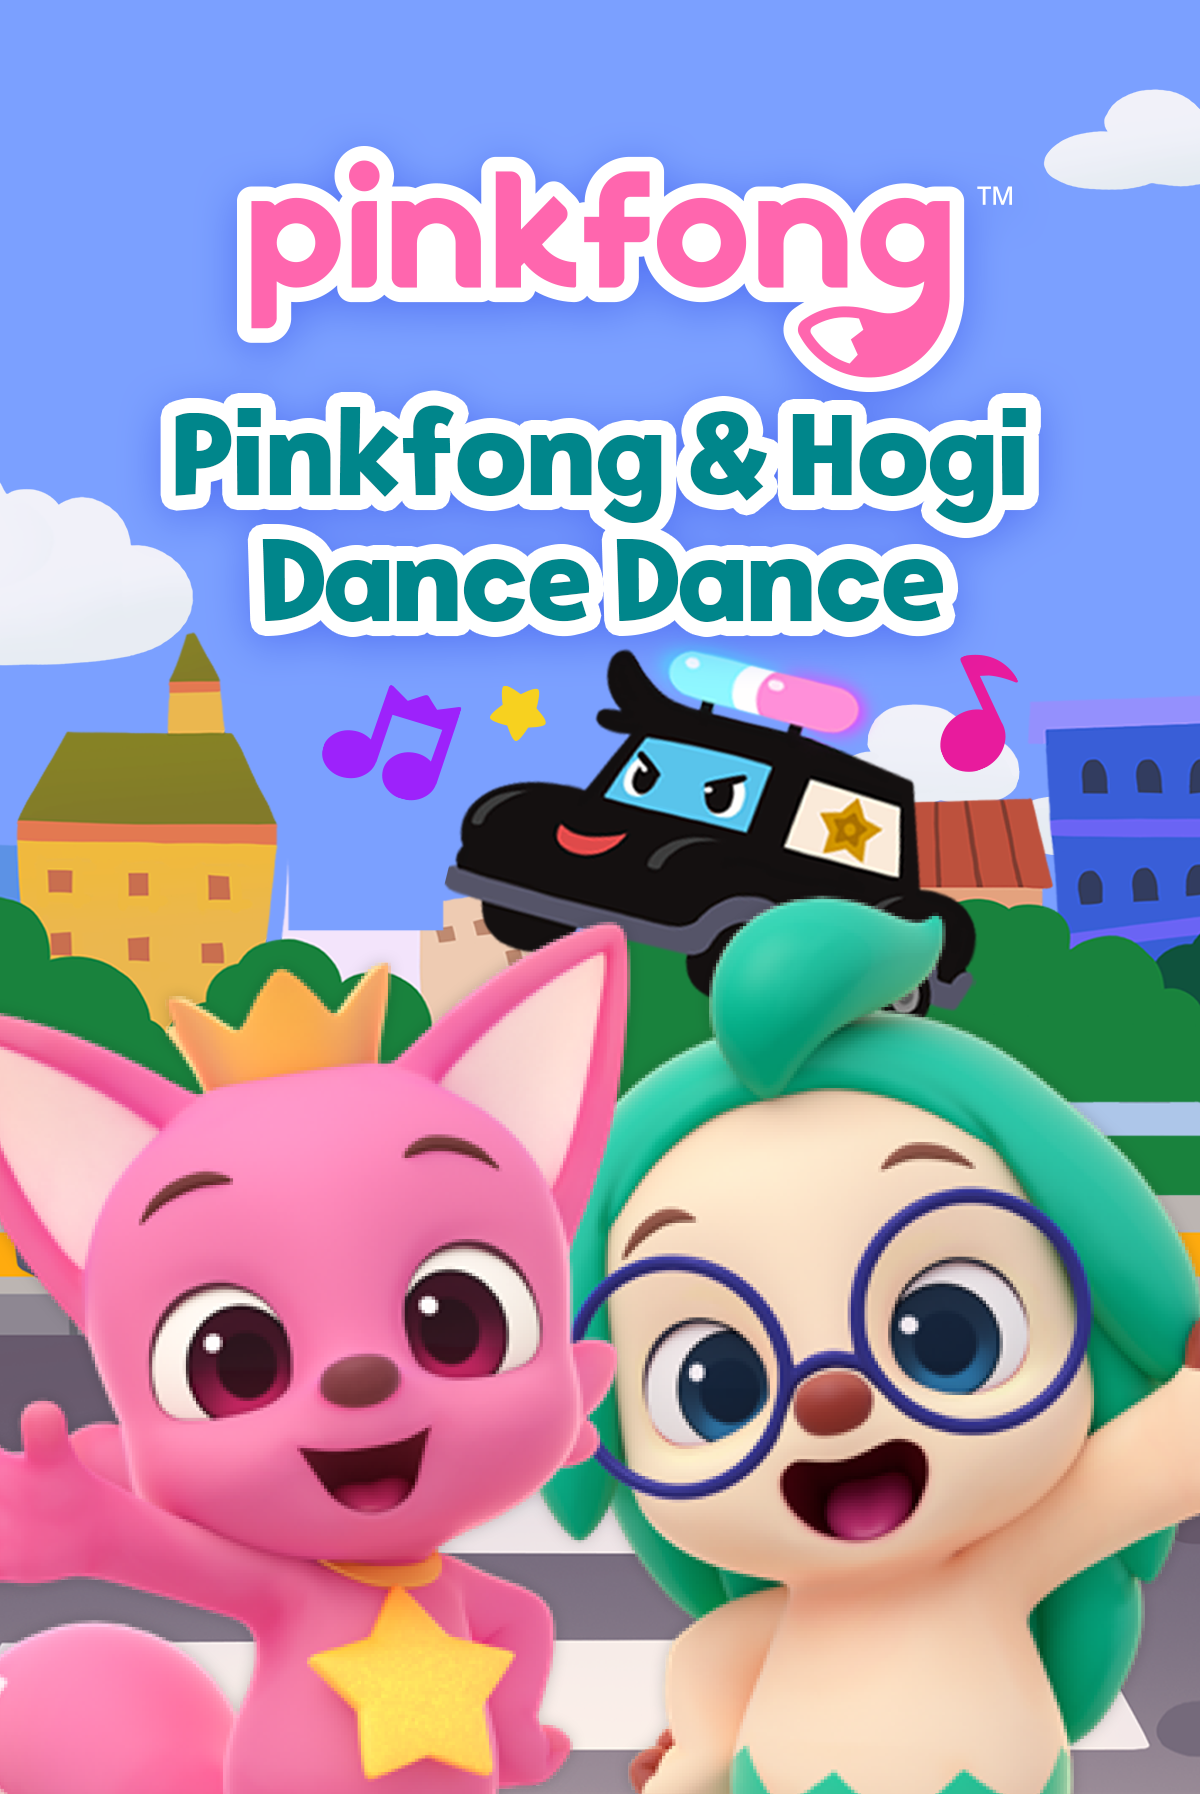 Now Player - Pinkfong & Hogi Dance Dance